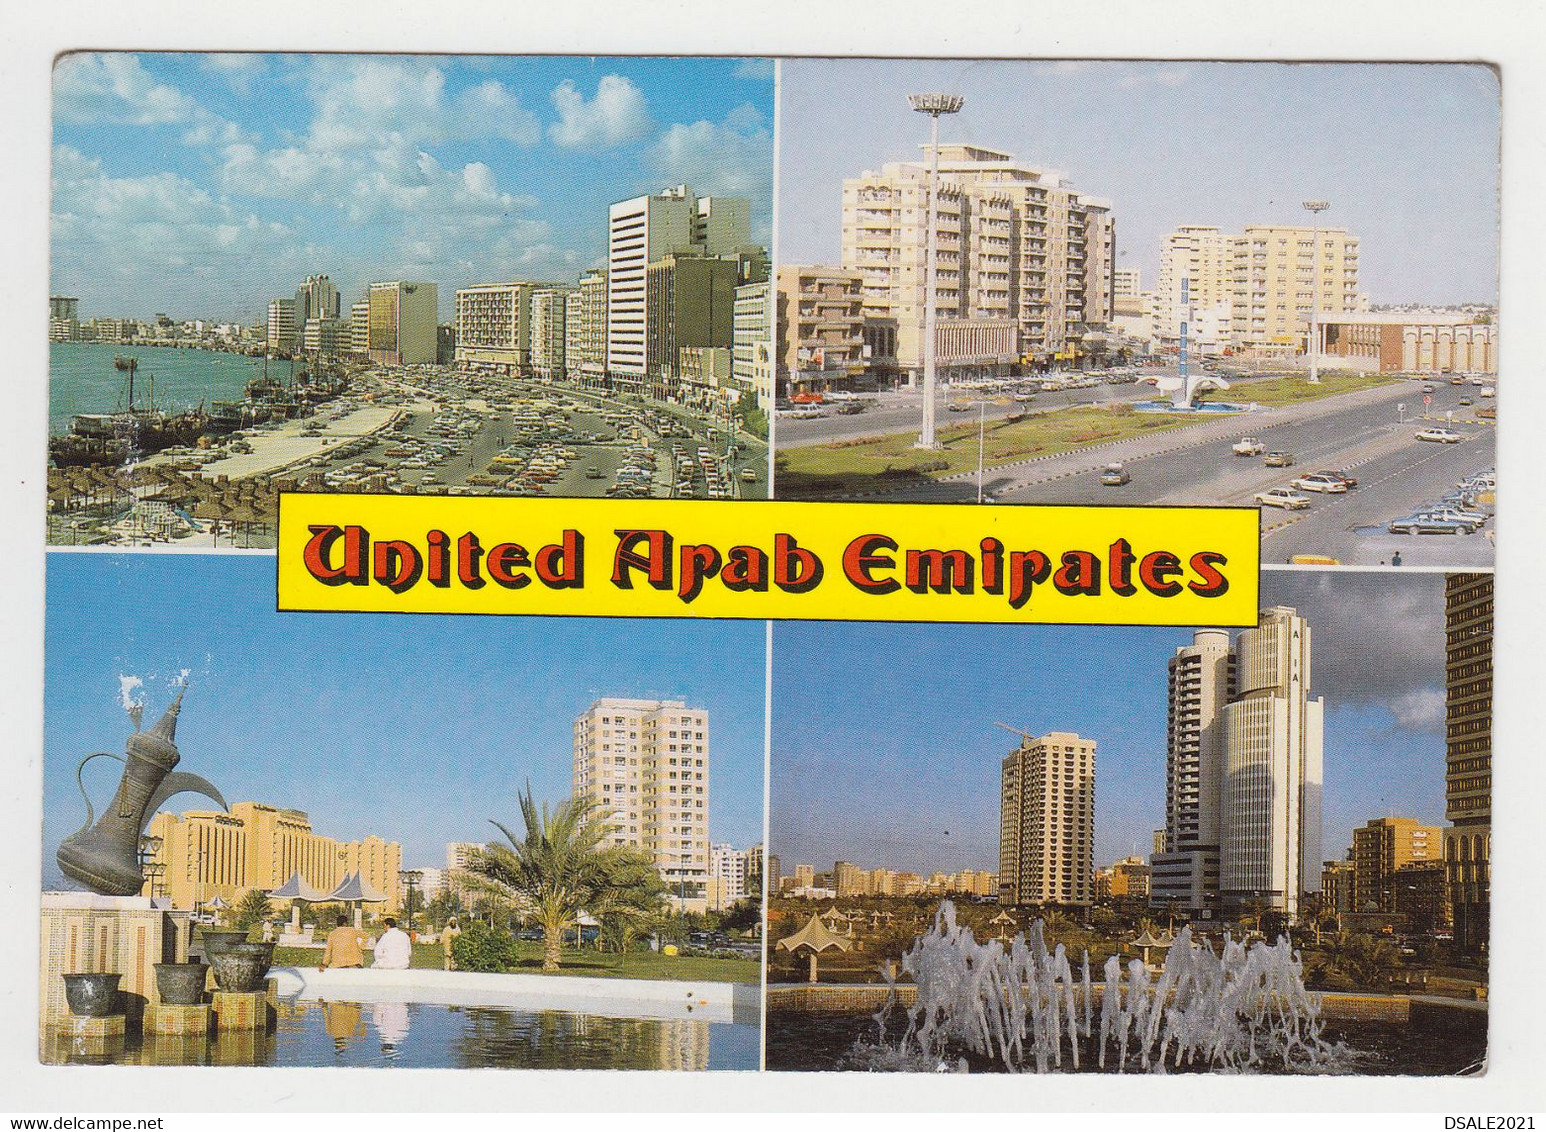 United Arab Emirates DUBAI Four Views Buildings, Park, Old Cars, View Vintage Photo Postcard RPPc (6999) - United Arab Emirates